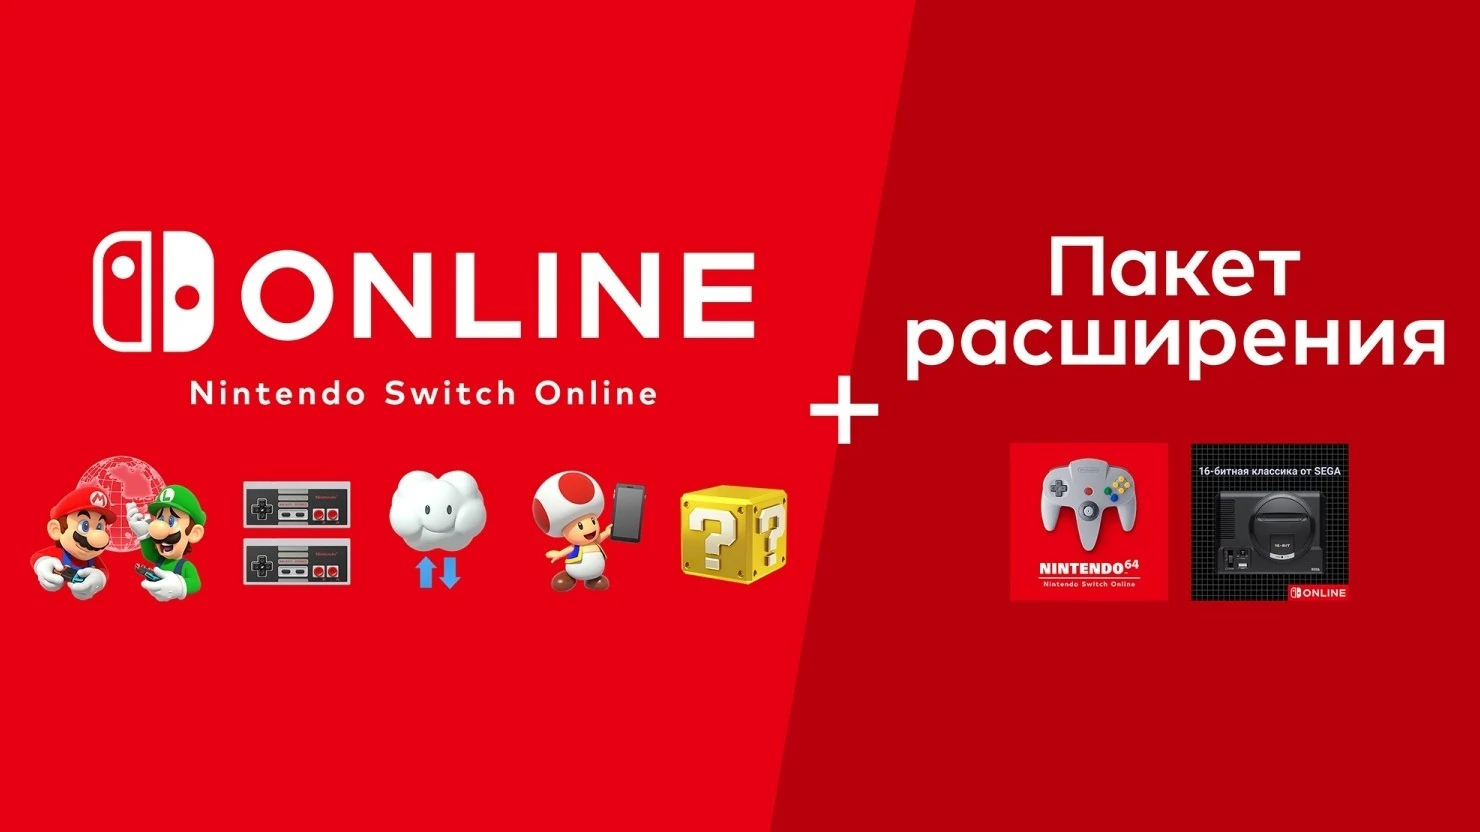 Nintendo представила подписку «Nintendo Switch Online + Пакет расширения»